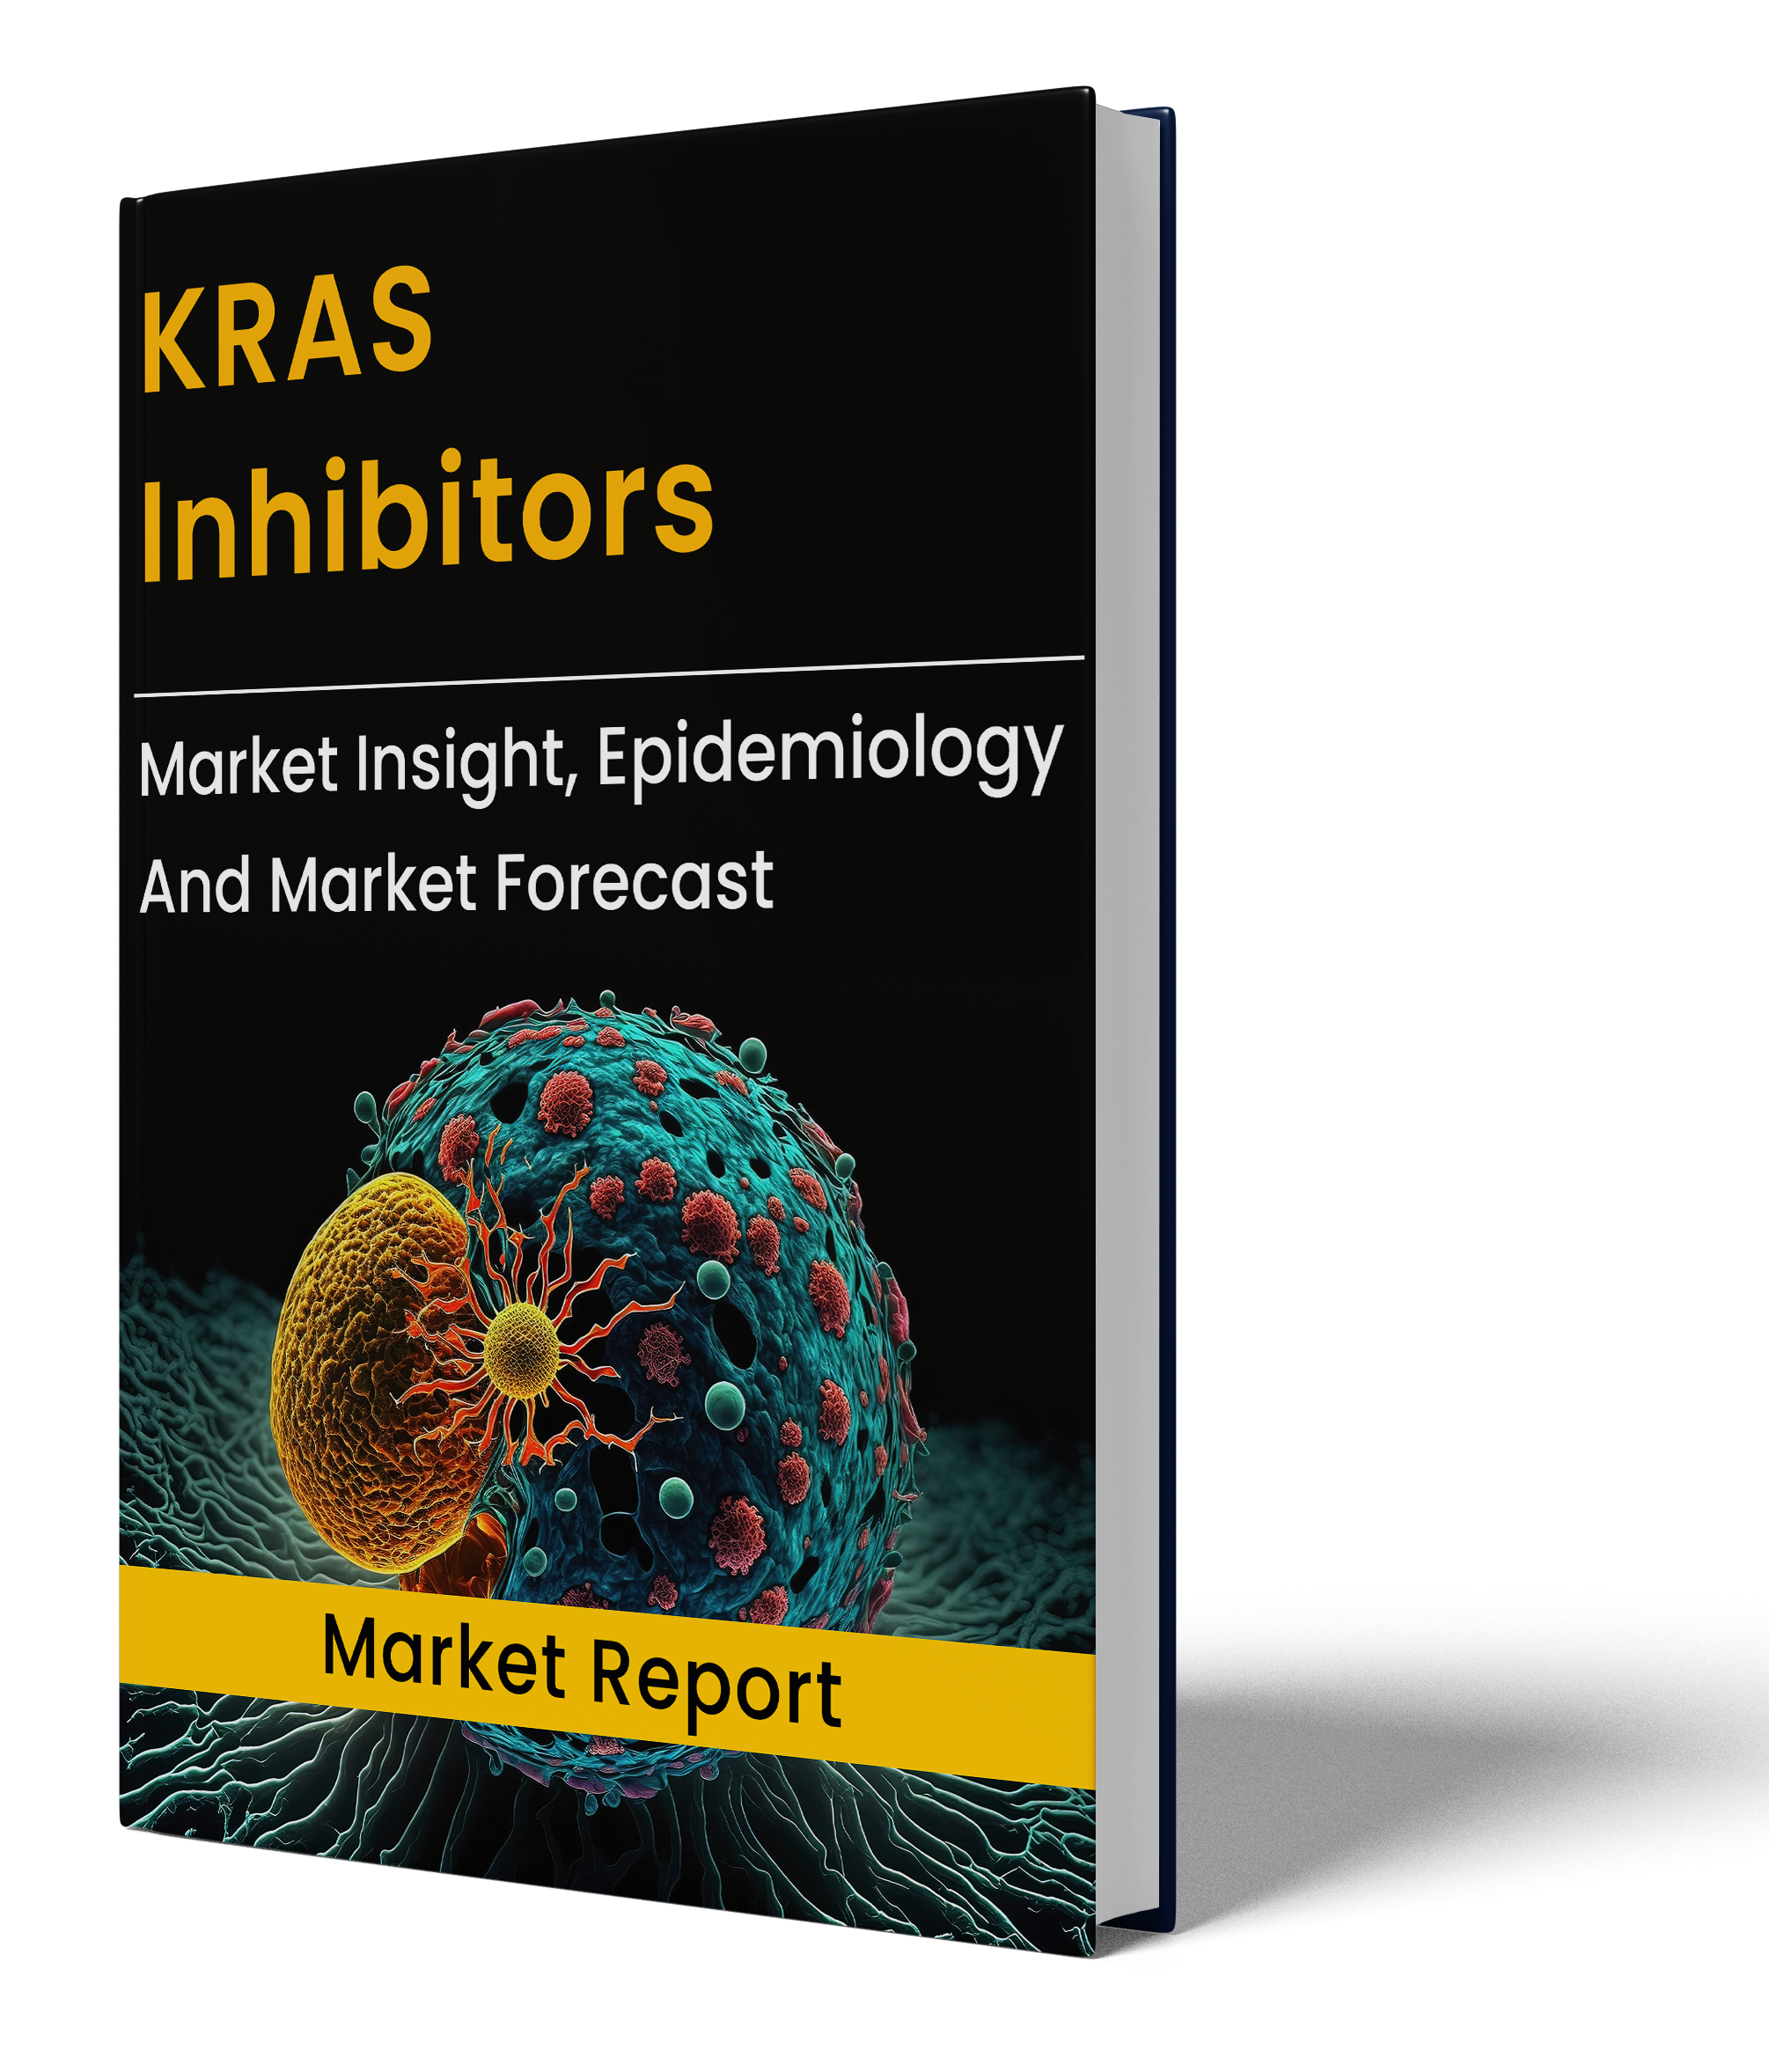 KRAS Inhibitors Market Report